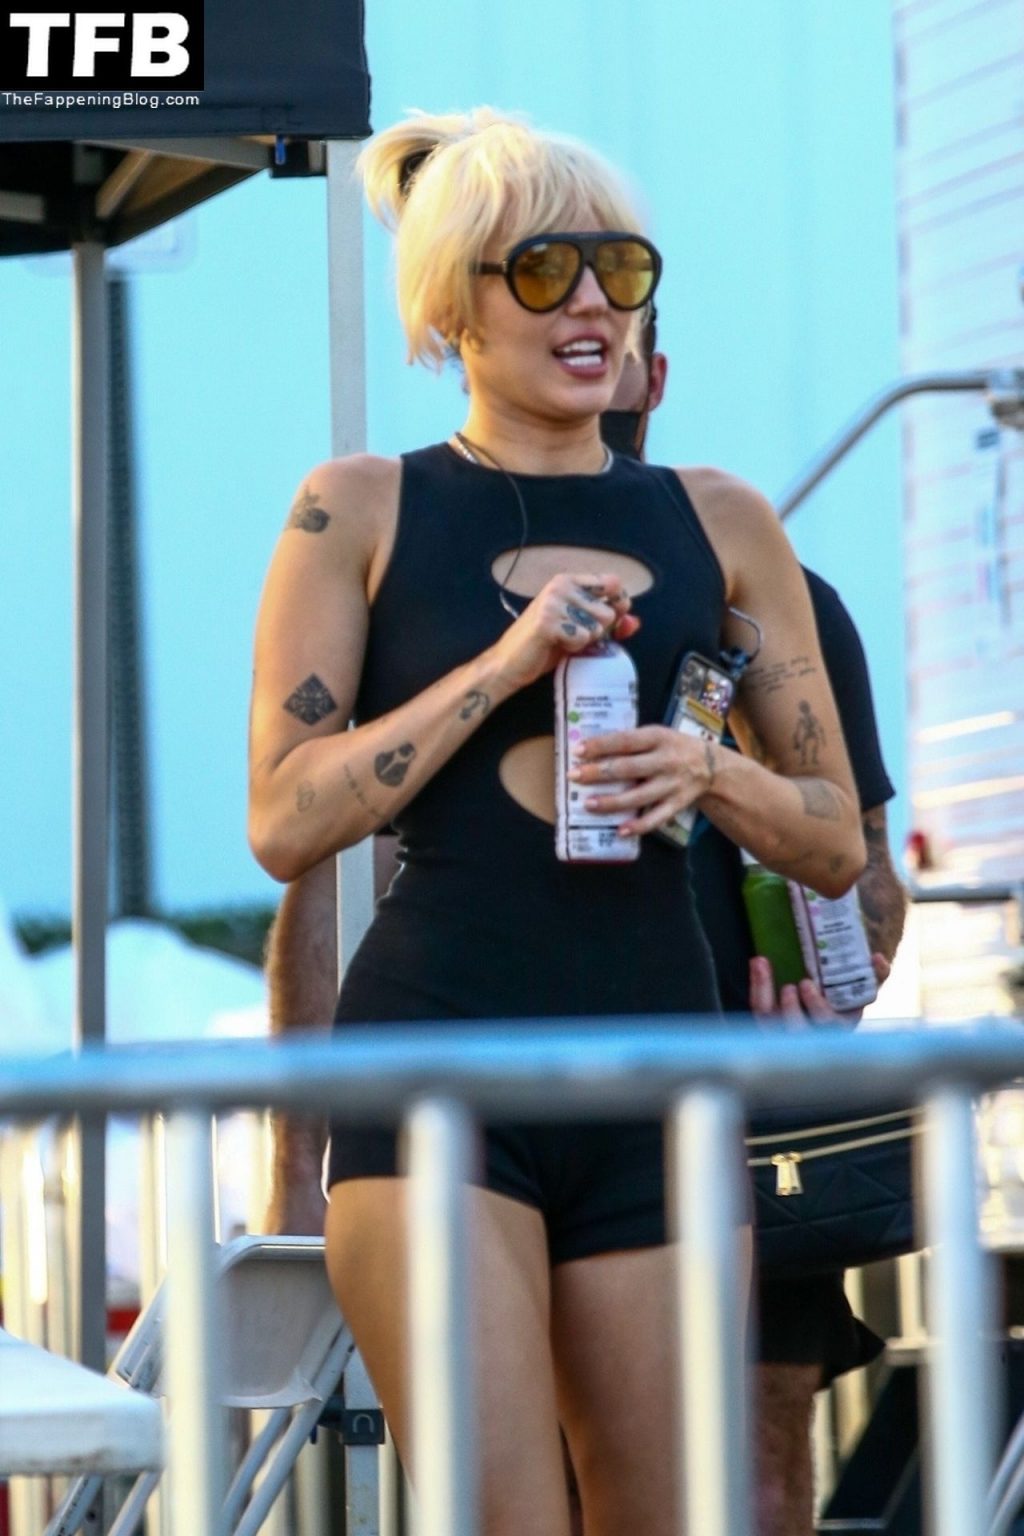 Miley Cyrus &amp; Noah Cyrus Arrive at Soundcheck for an NBC Concert in Miami (40 Photos)